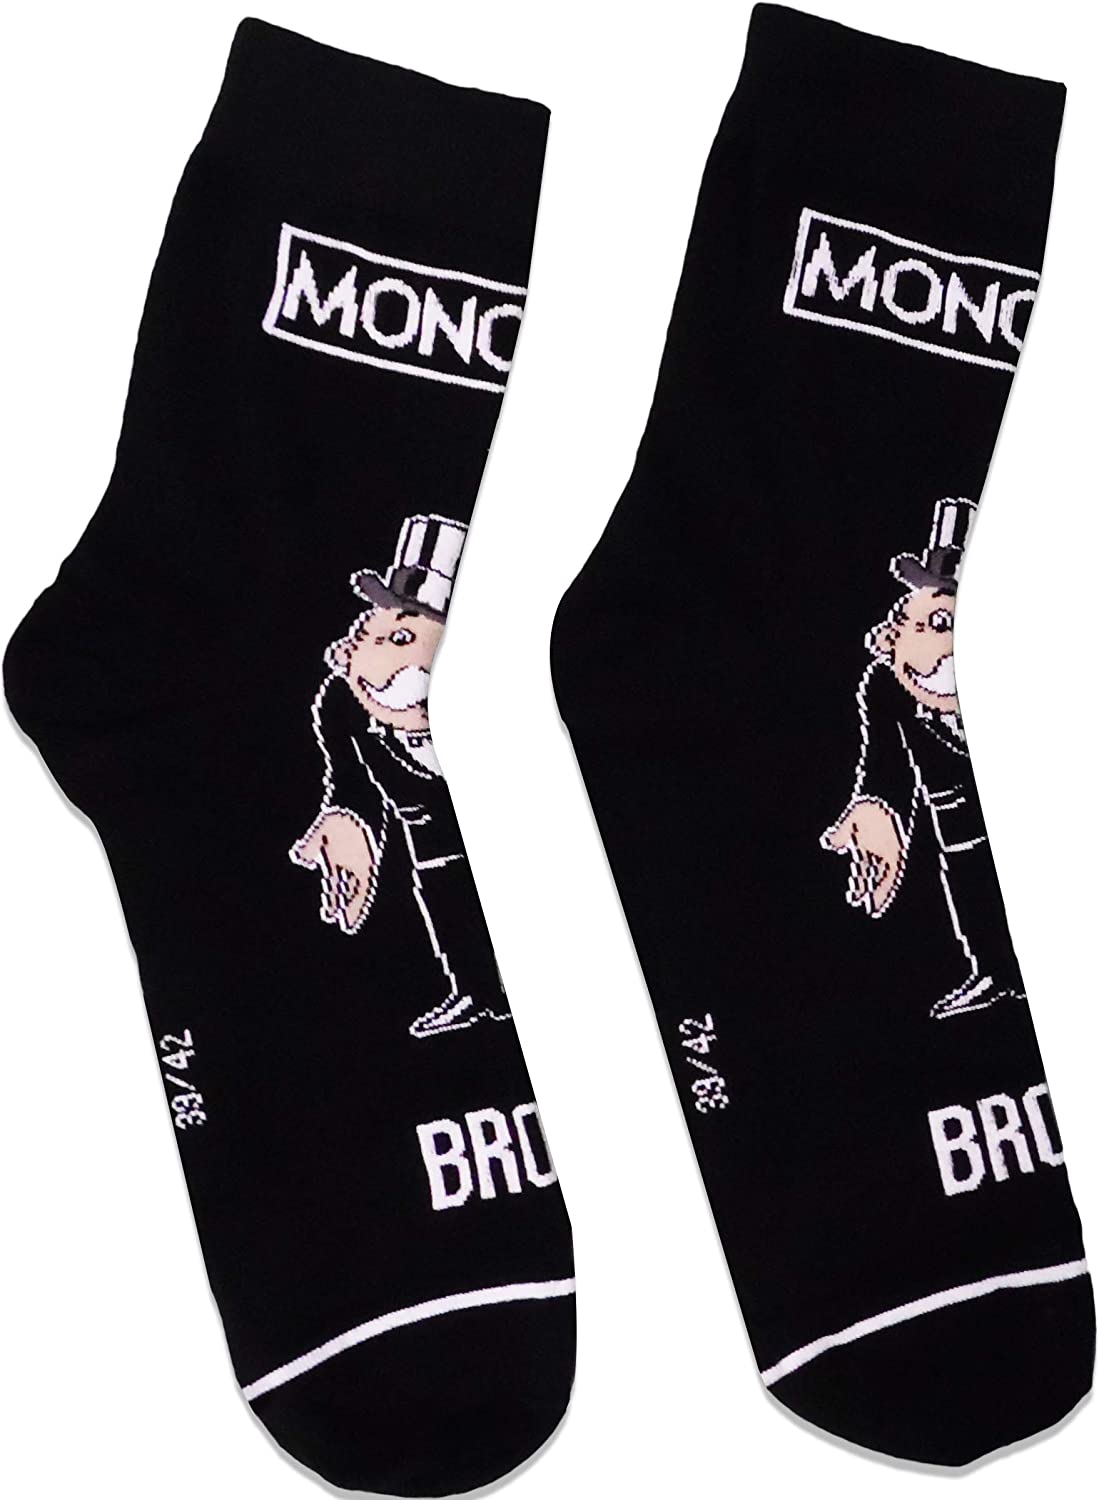 Monopoly Mens Calf Socks Cotton